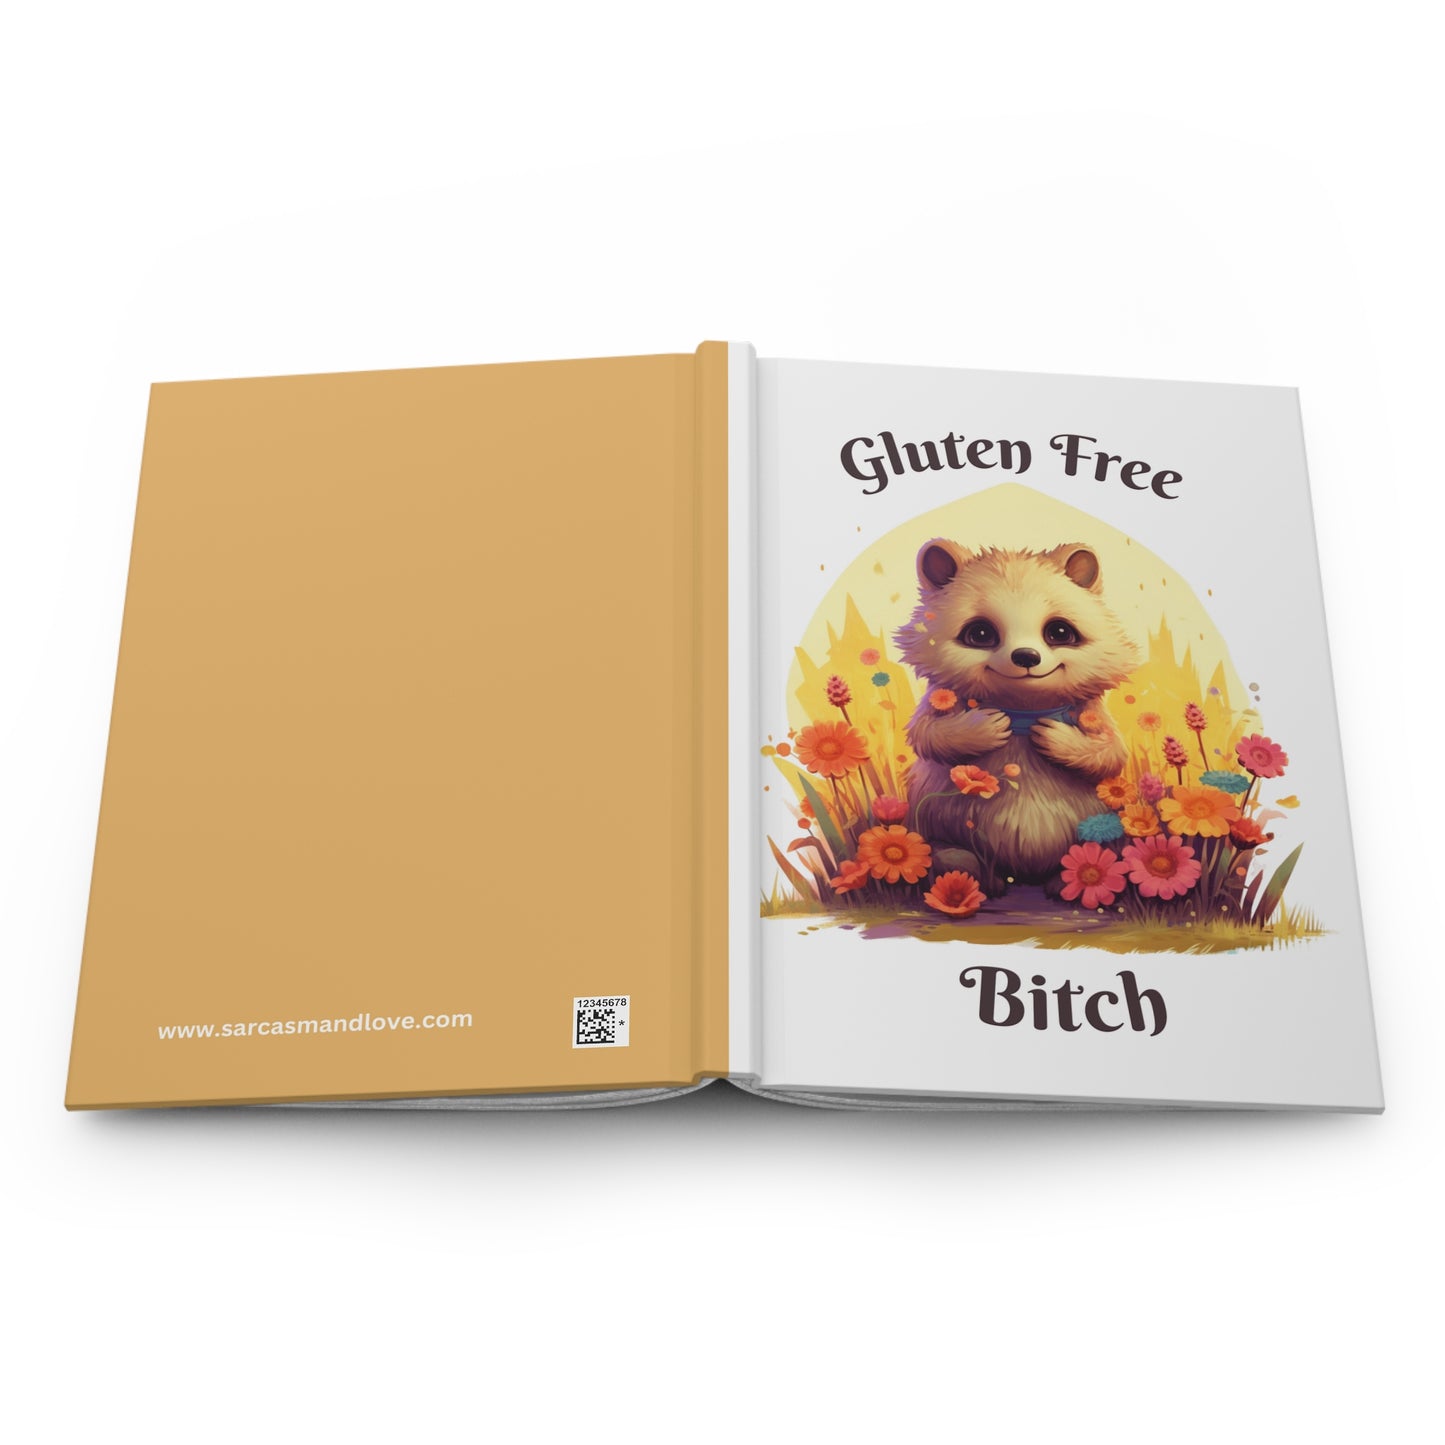 Gluten-Free Bitch Hardcover Journal - Wellness Notebook, Daily Gratitude, Mindfulness, Self Care, Positive Affirmations, 5.75"x7.5" Size